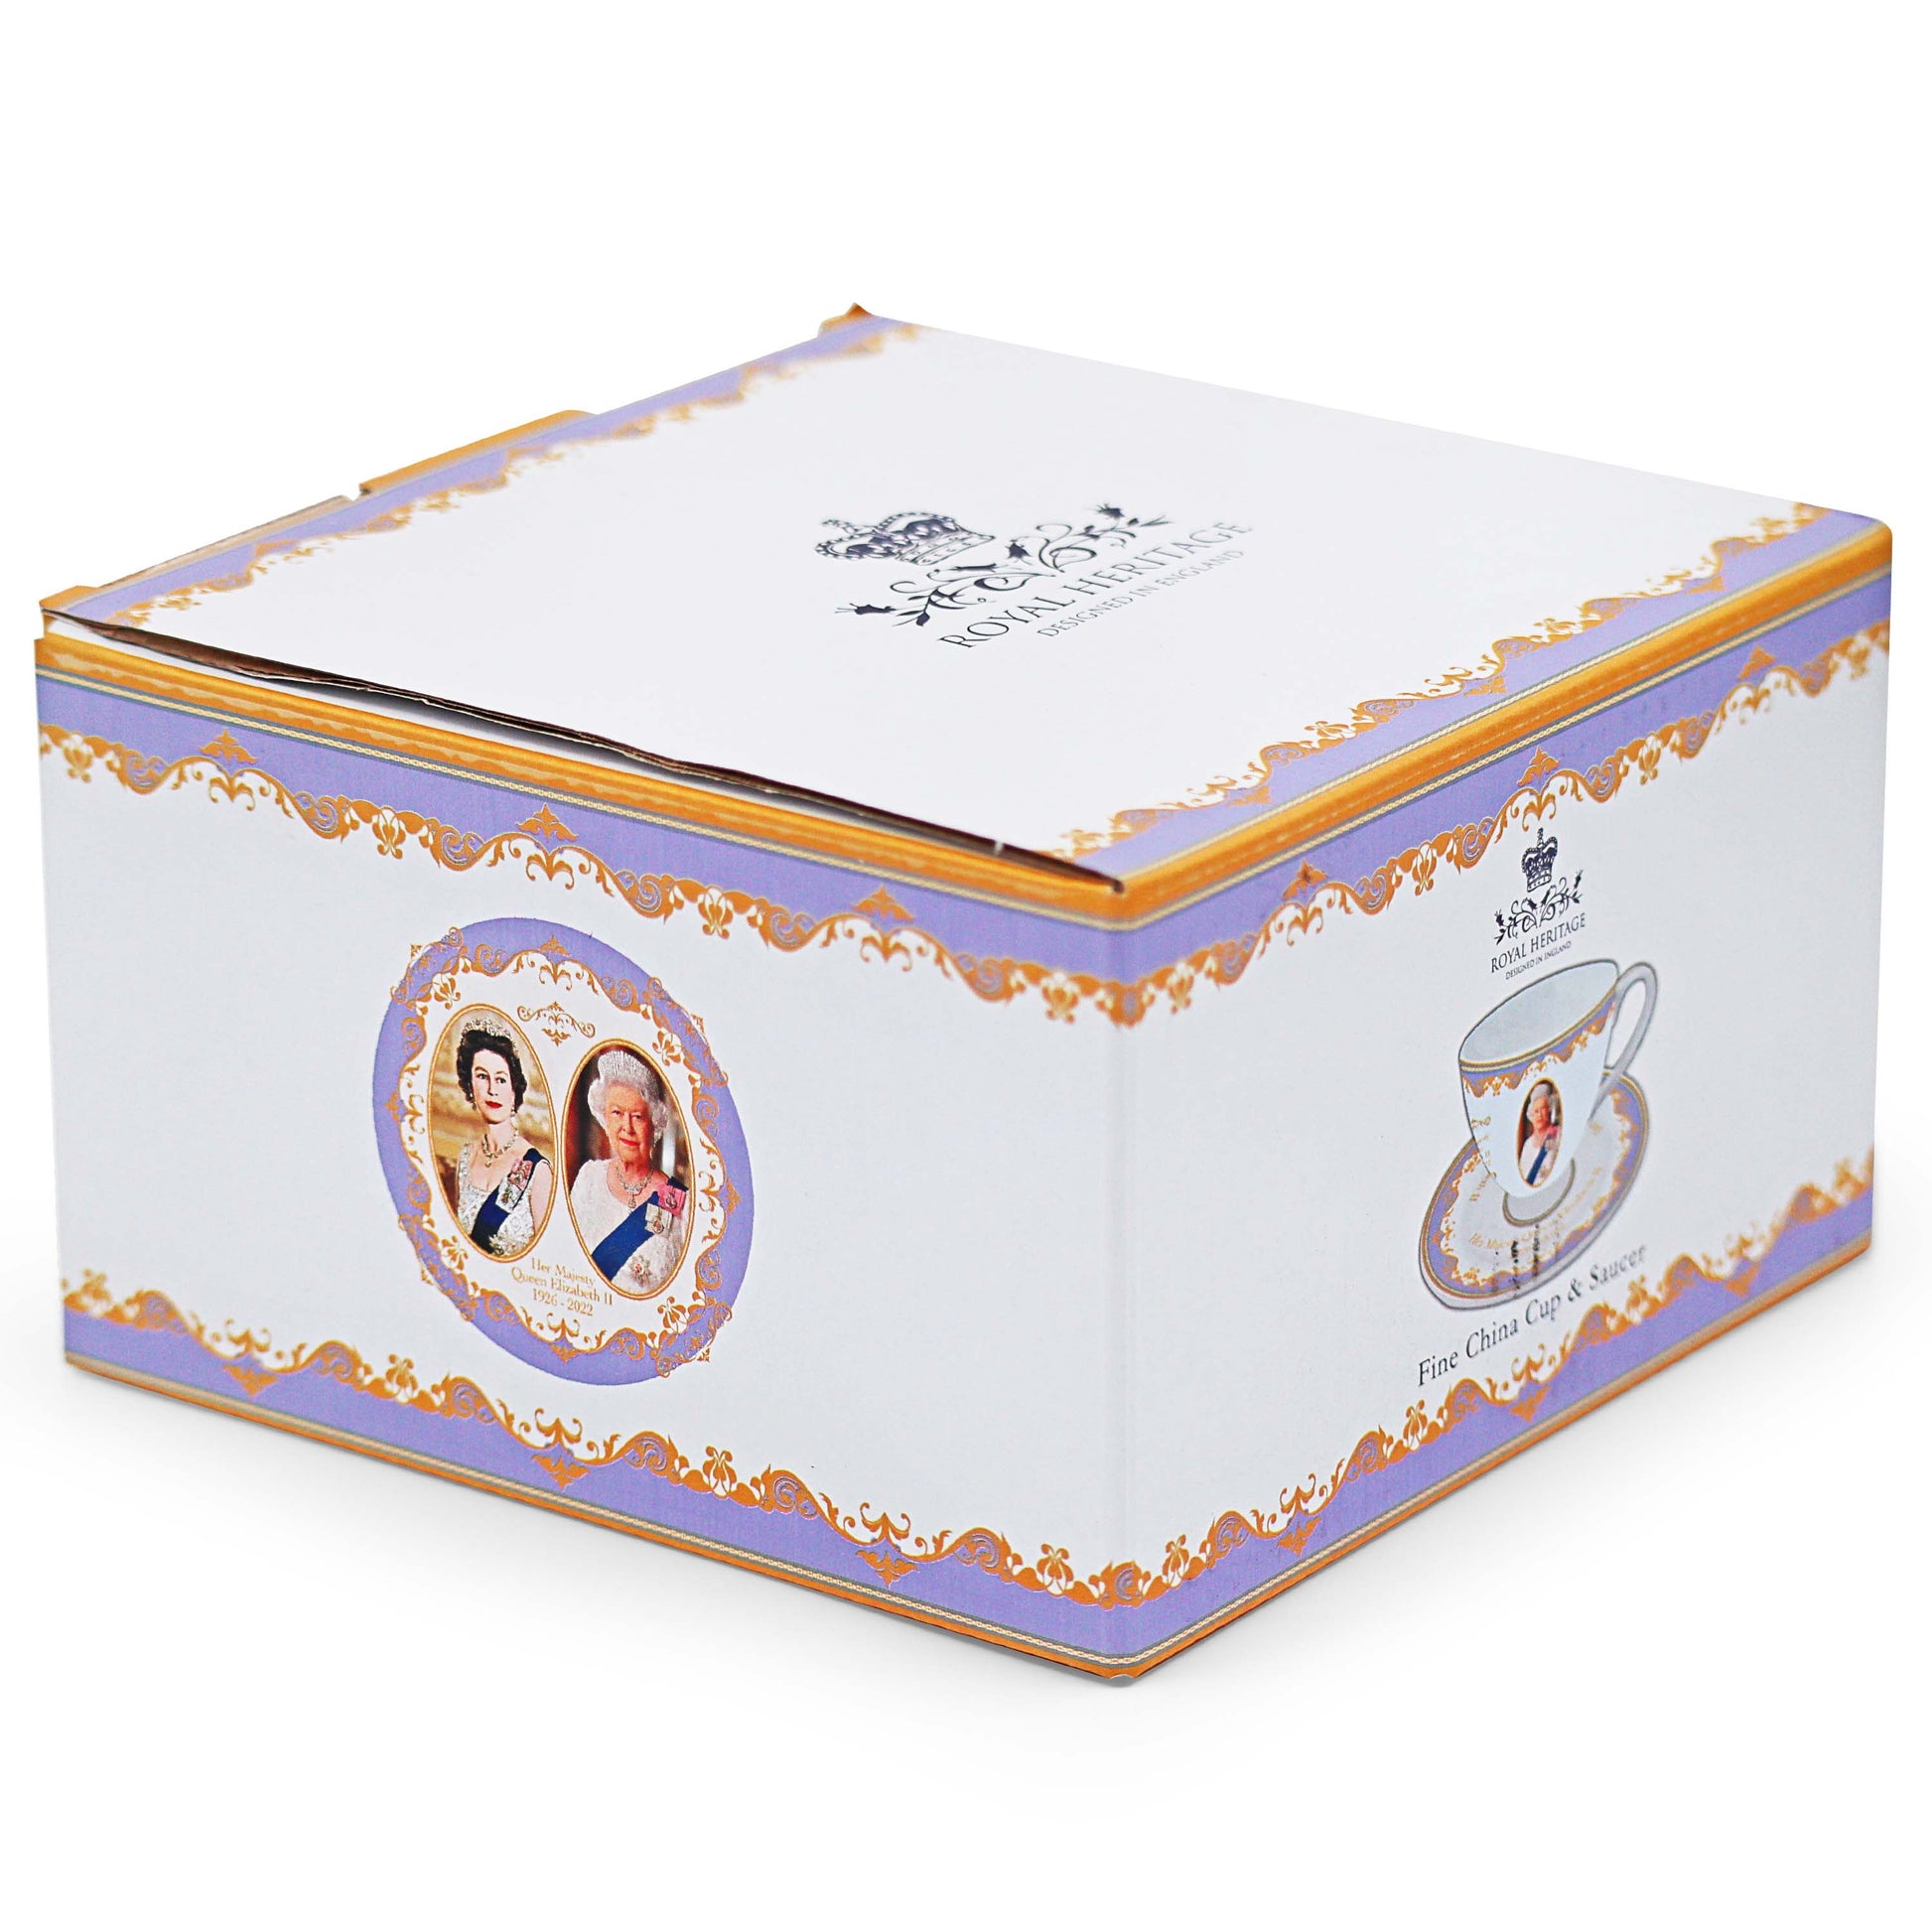 Her Majesty Queen Elizabeth II Commemorative Boxed Teacup & Saucer Set - London Souvenir Gift